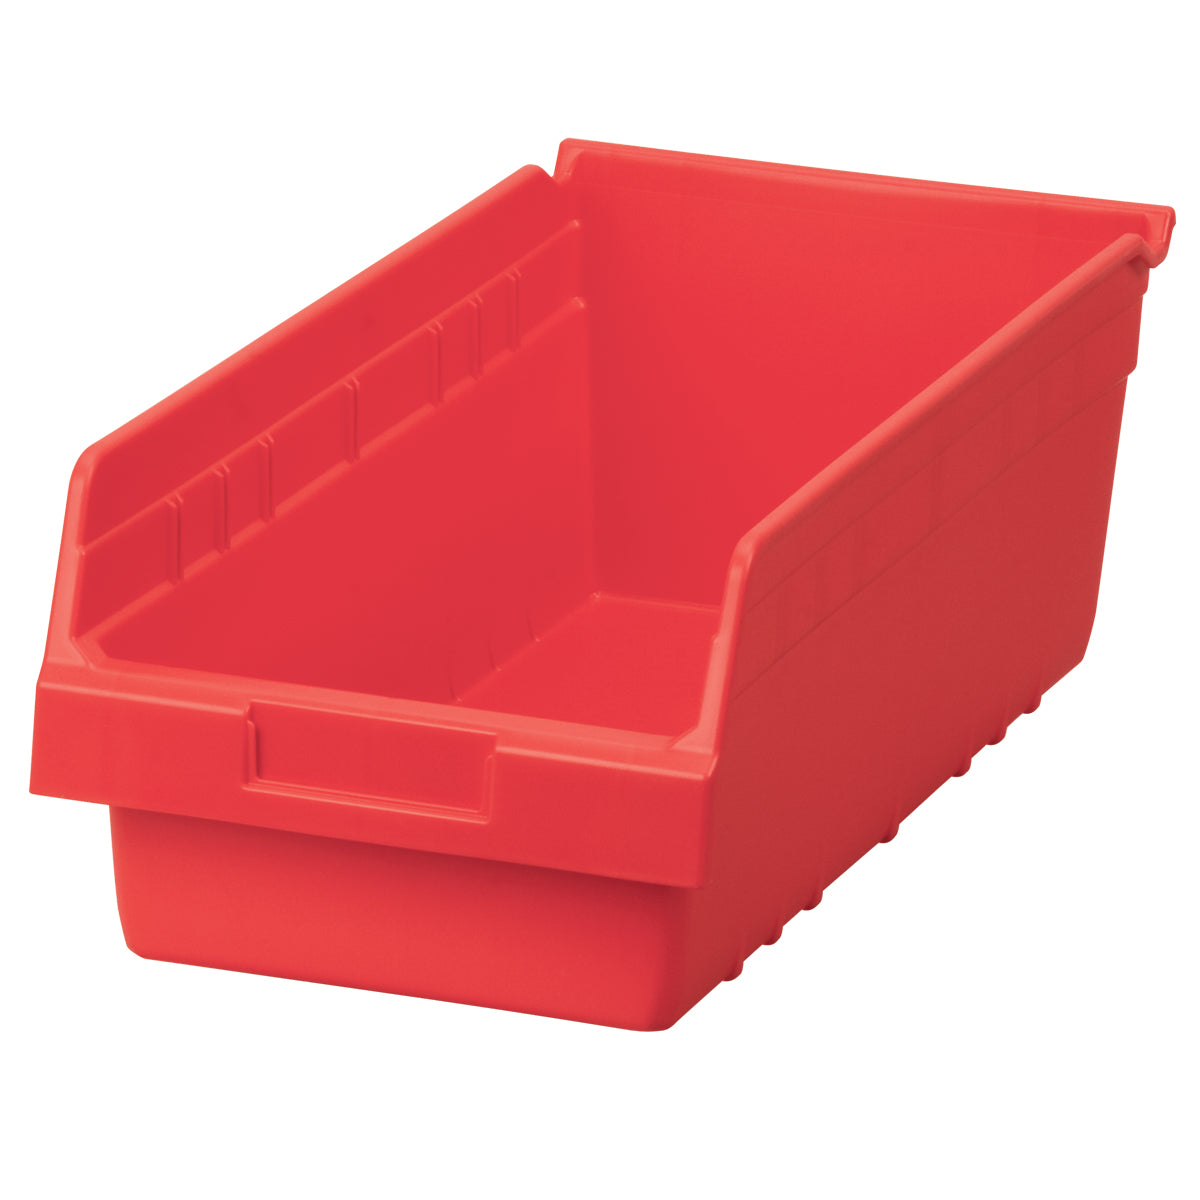 Akro-Mils (8 pack) 30088 Plastic Storage ShelfMax Bin Container